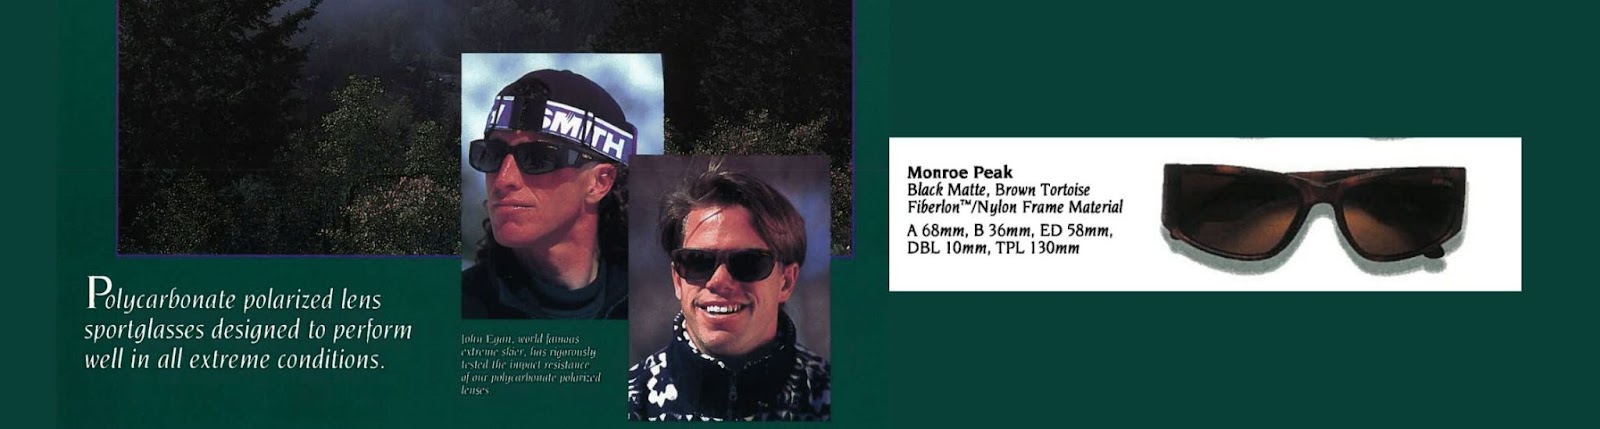 images from Smith Optics 1993 catalog showing the Monroe Peak sunglasses